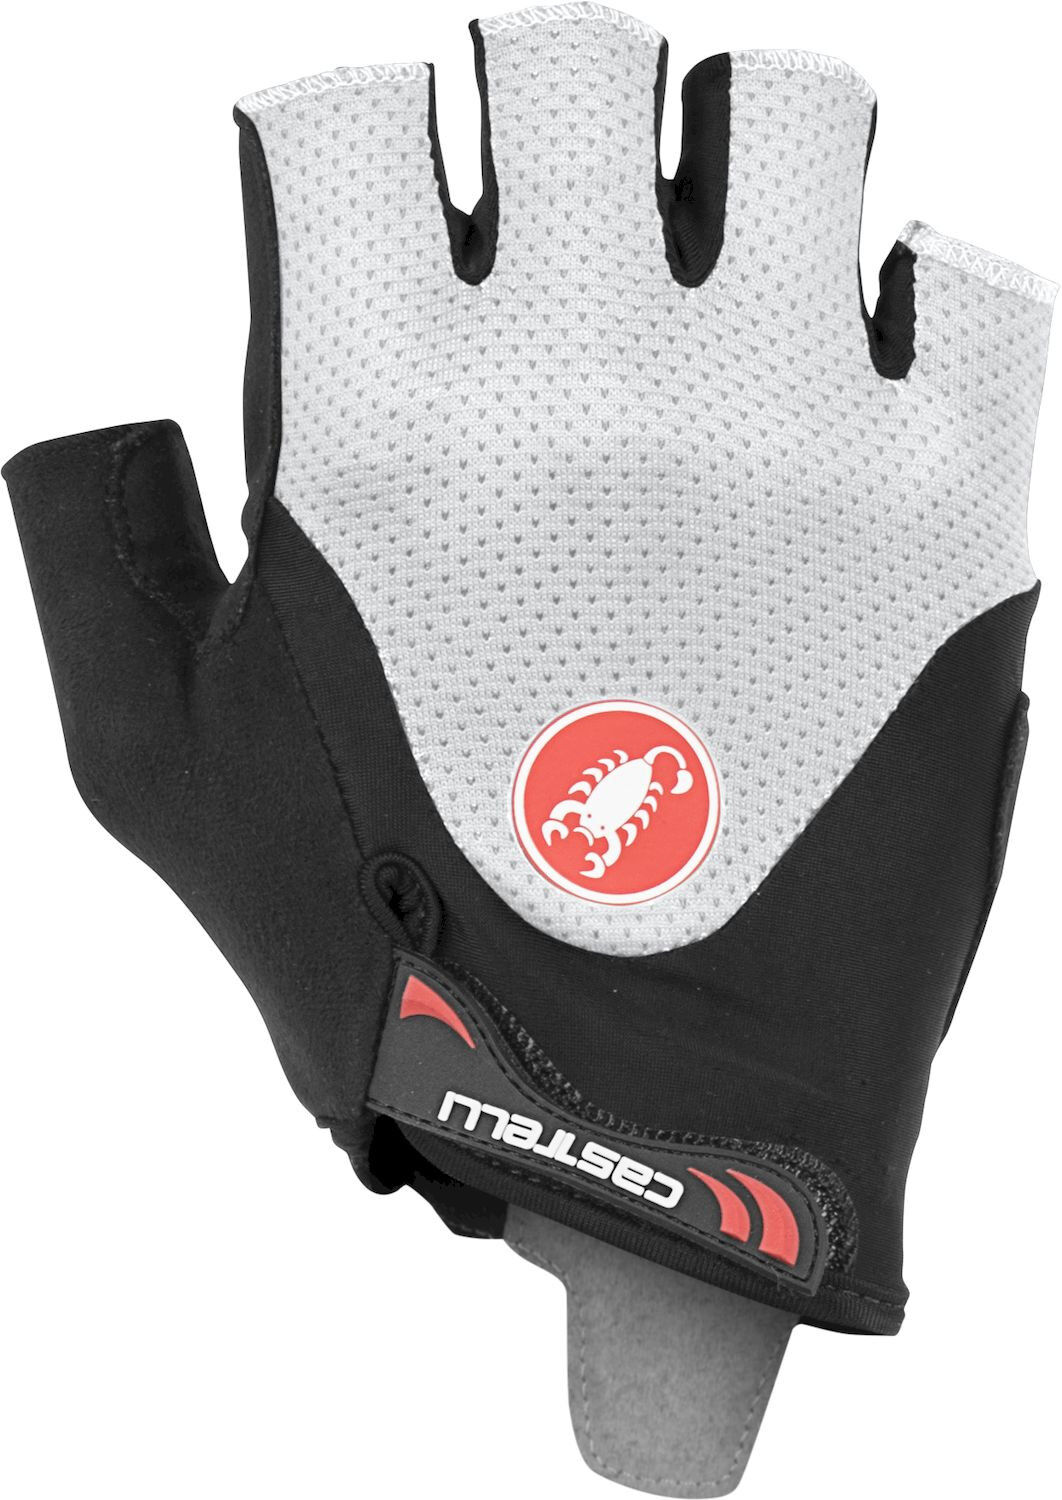 Castelli Arenberg Gel 2 Glove - Cycling gloves